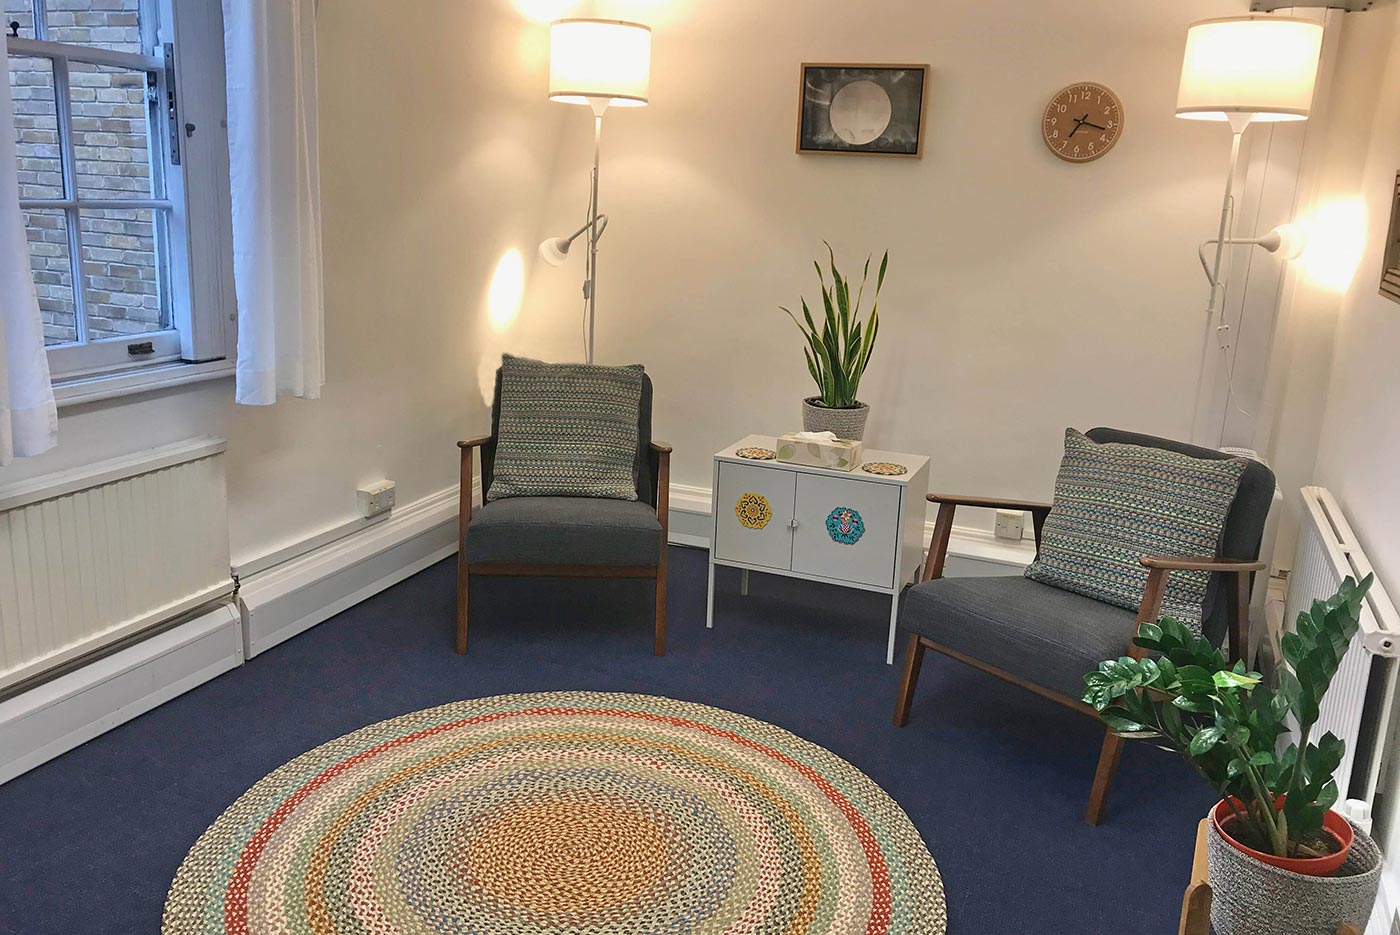 London Bridge room 31: 2 armchairs, cabinet, plants, lamps, pictures, rug